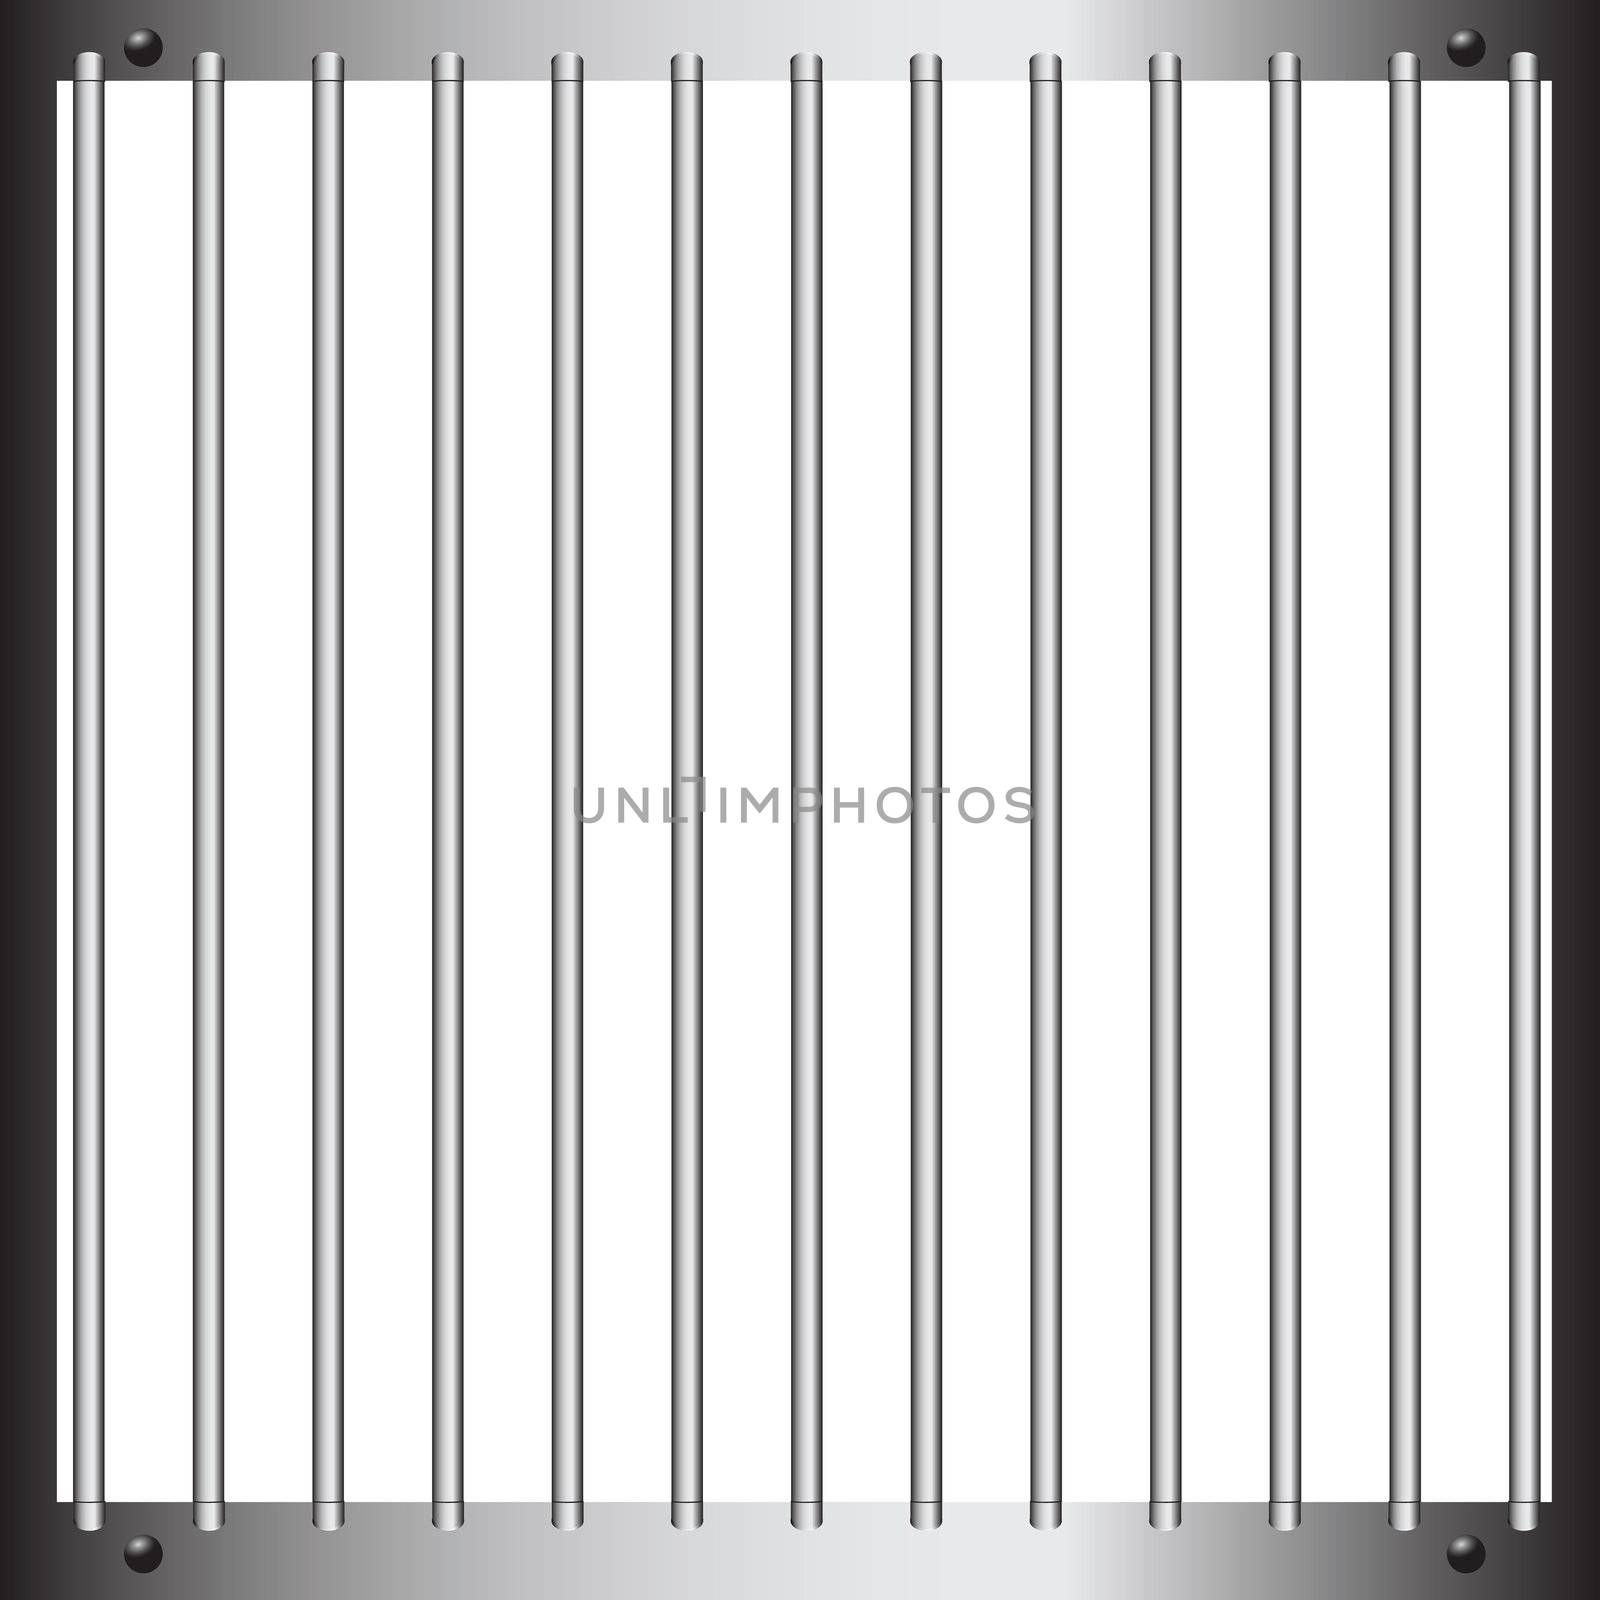 Steel bars of prison bars. Vector illustration.